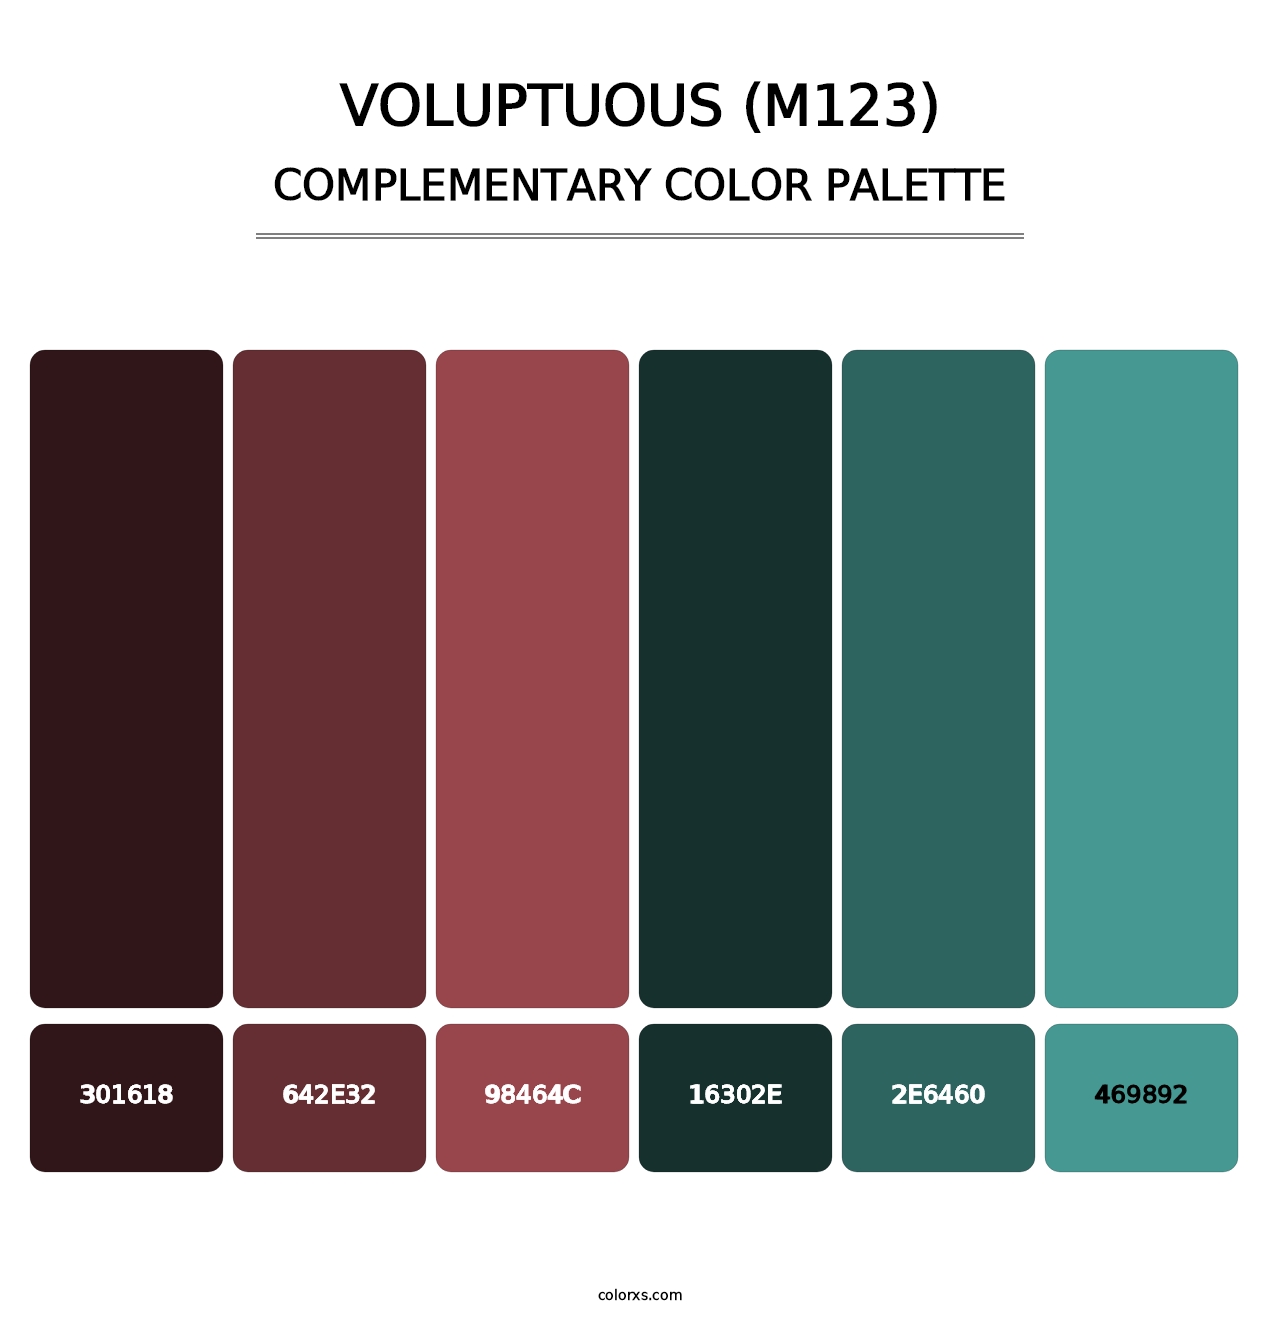 Voluptuous (M123) - Complementary Color Palette